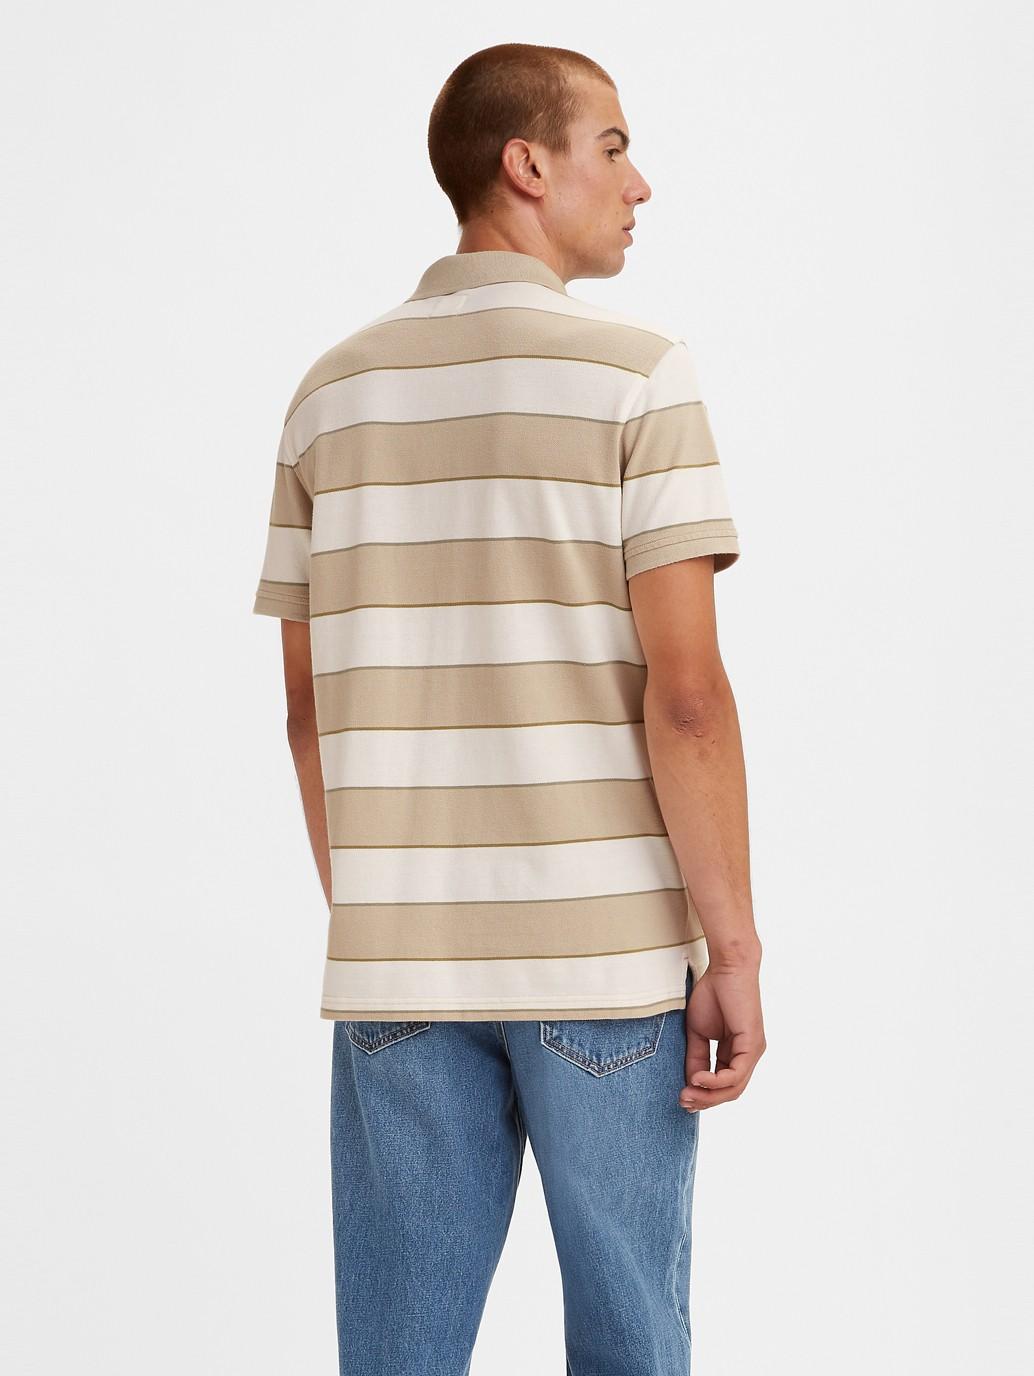 Buy Levi's® Men's Housemark Polo Shirt | Levi's® Official Online Store MY